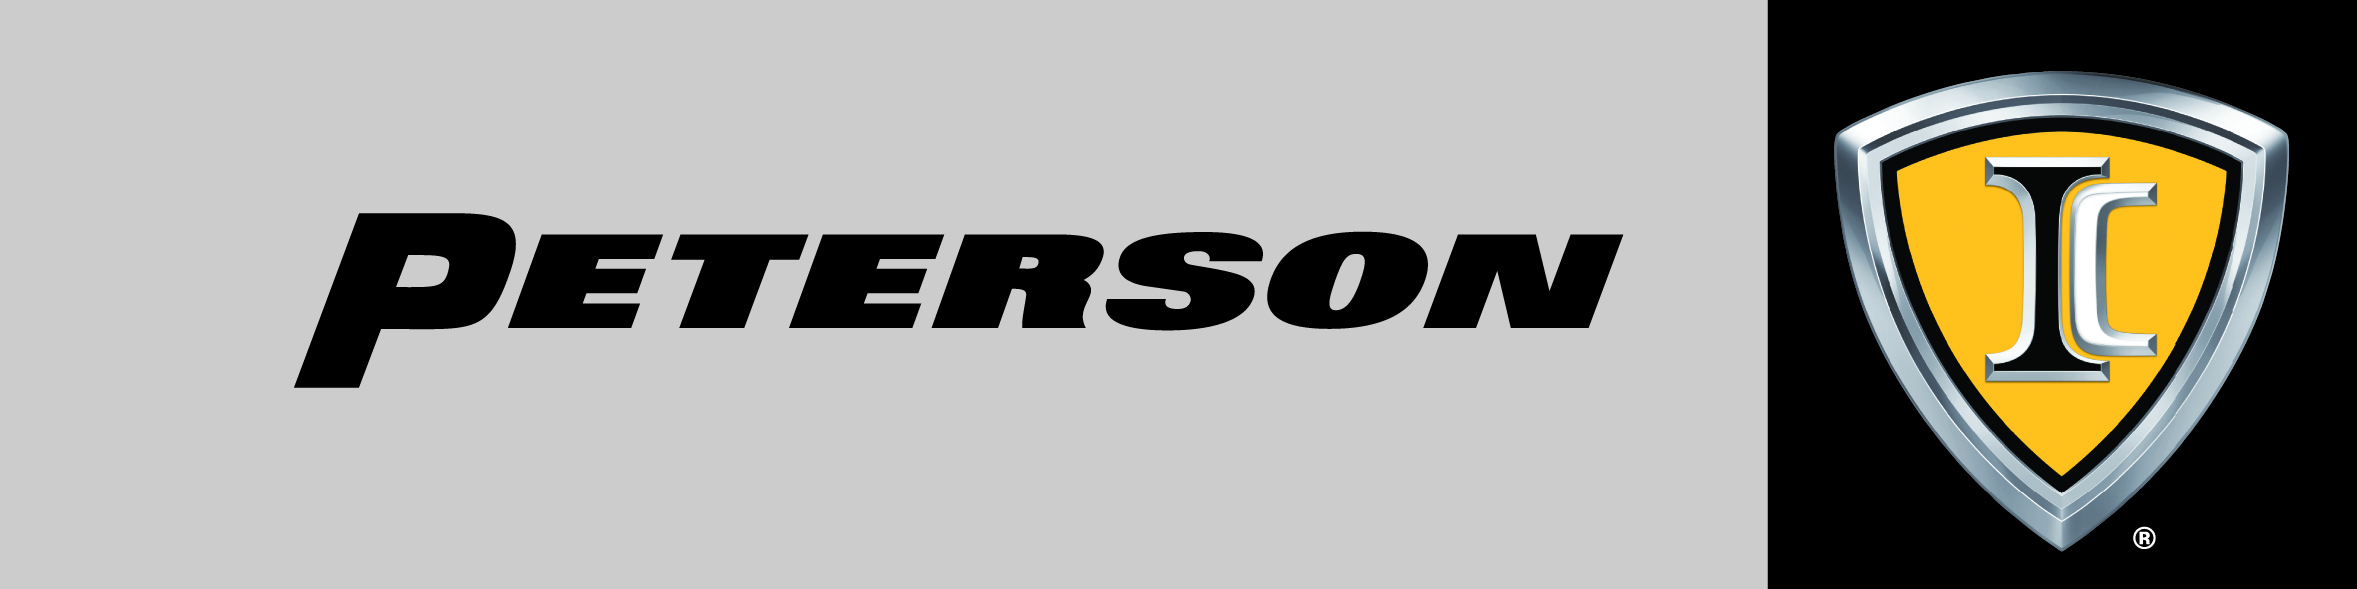 Peterson Trucks Logo